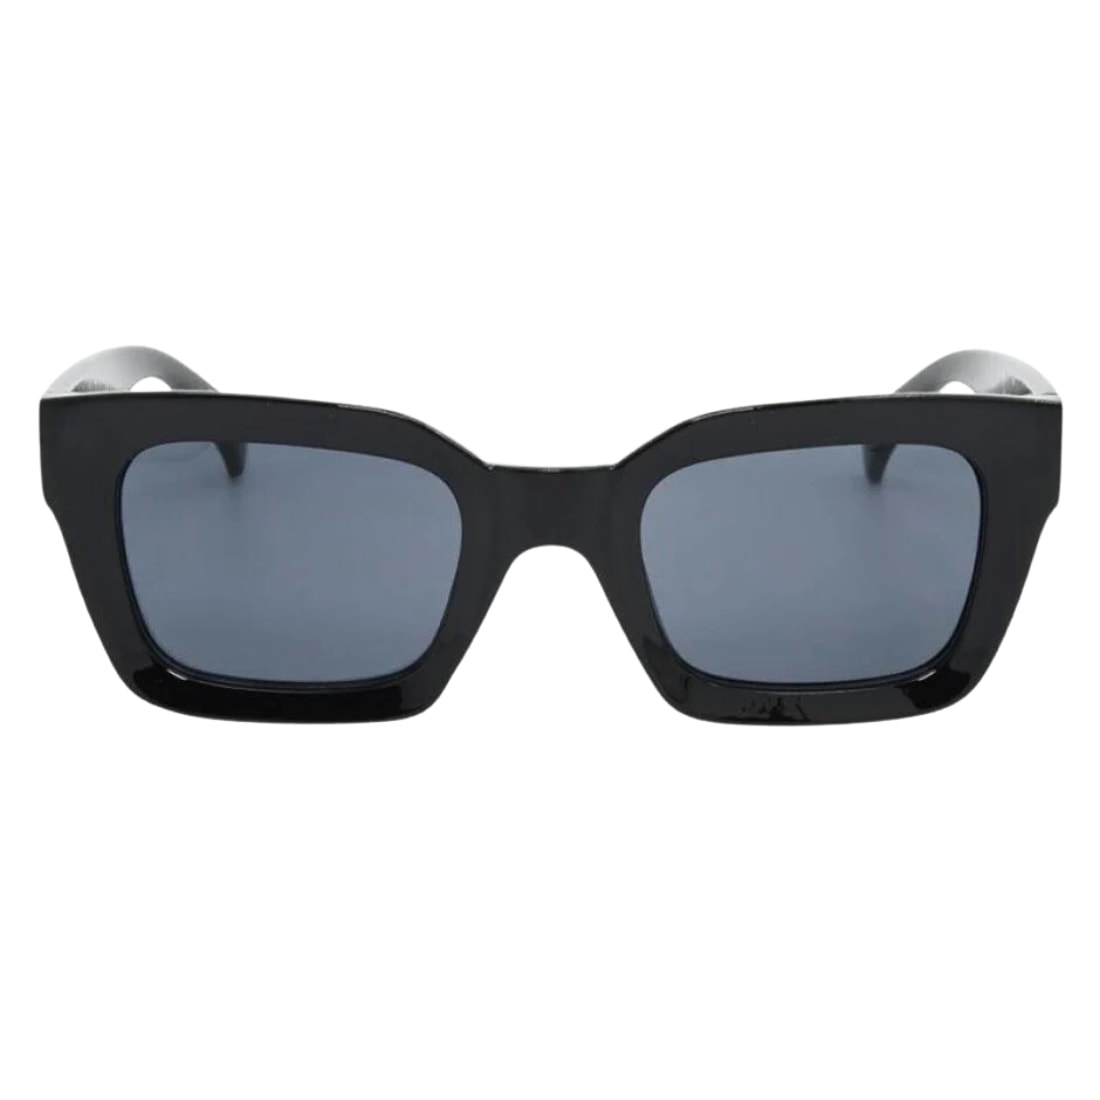 I-Sea Hendrix Polarised Sunglasses - Black/Smoke Polarized Lens - Square/Rectangular Sunglasses by I-Sea